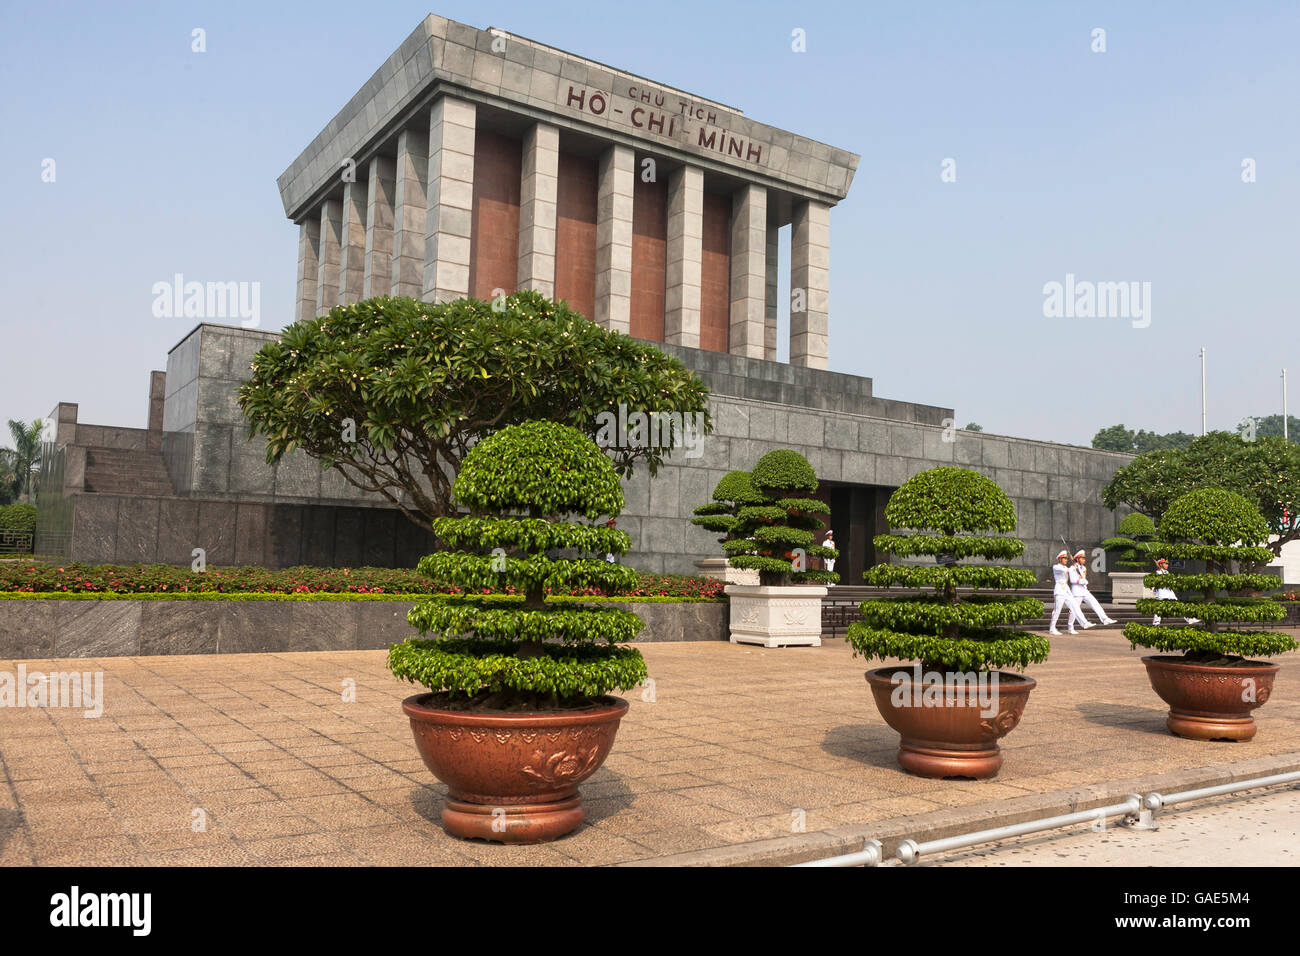 The impressive façade of Ho Chi Minh's Mausoleum, Hung Vuong, Dien Bien, Ba Dinh, Ha Noi, Vietnam Stock Photo